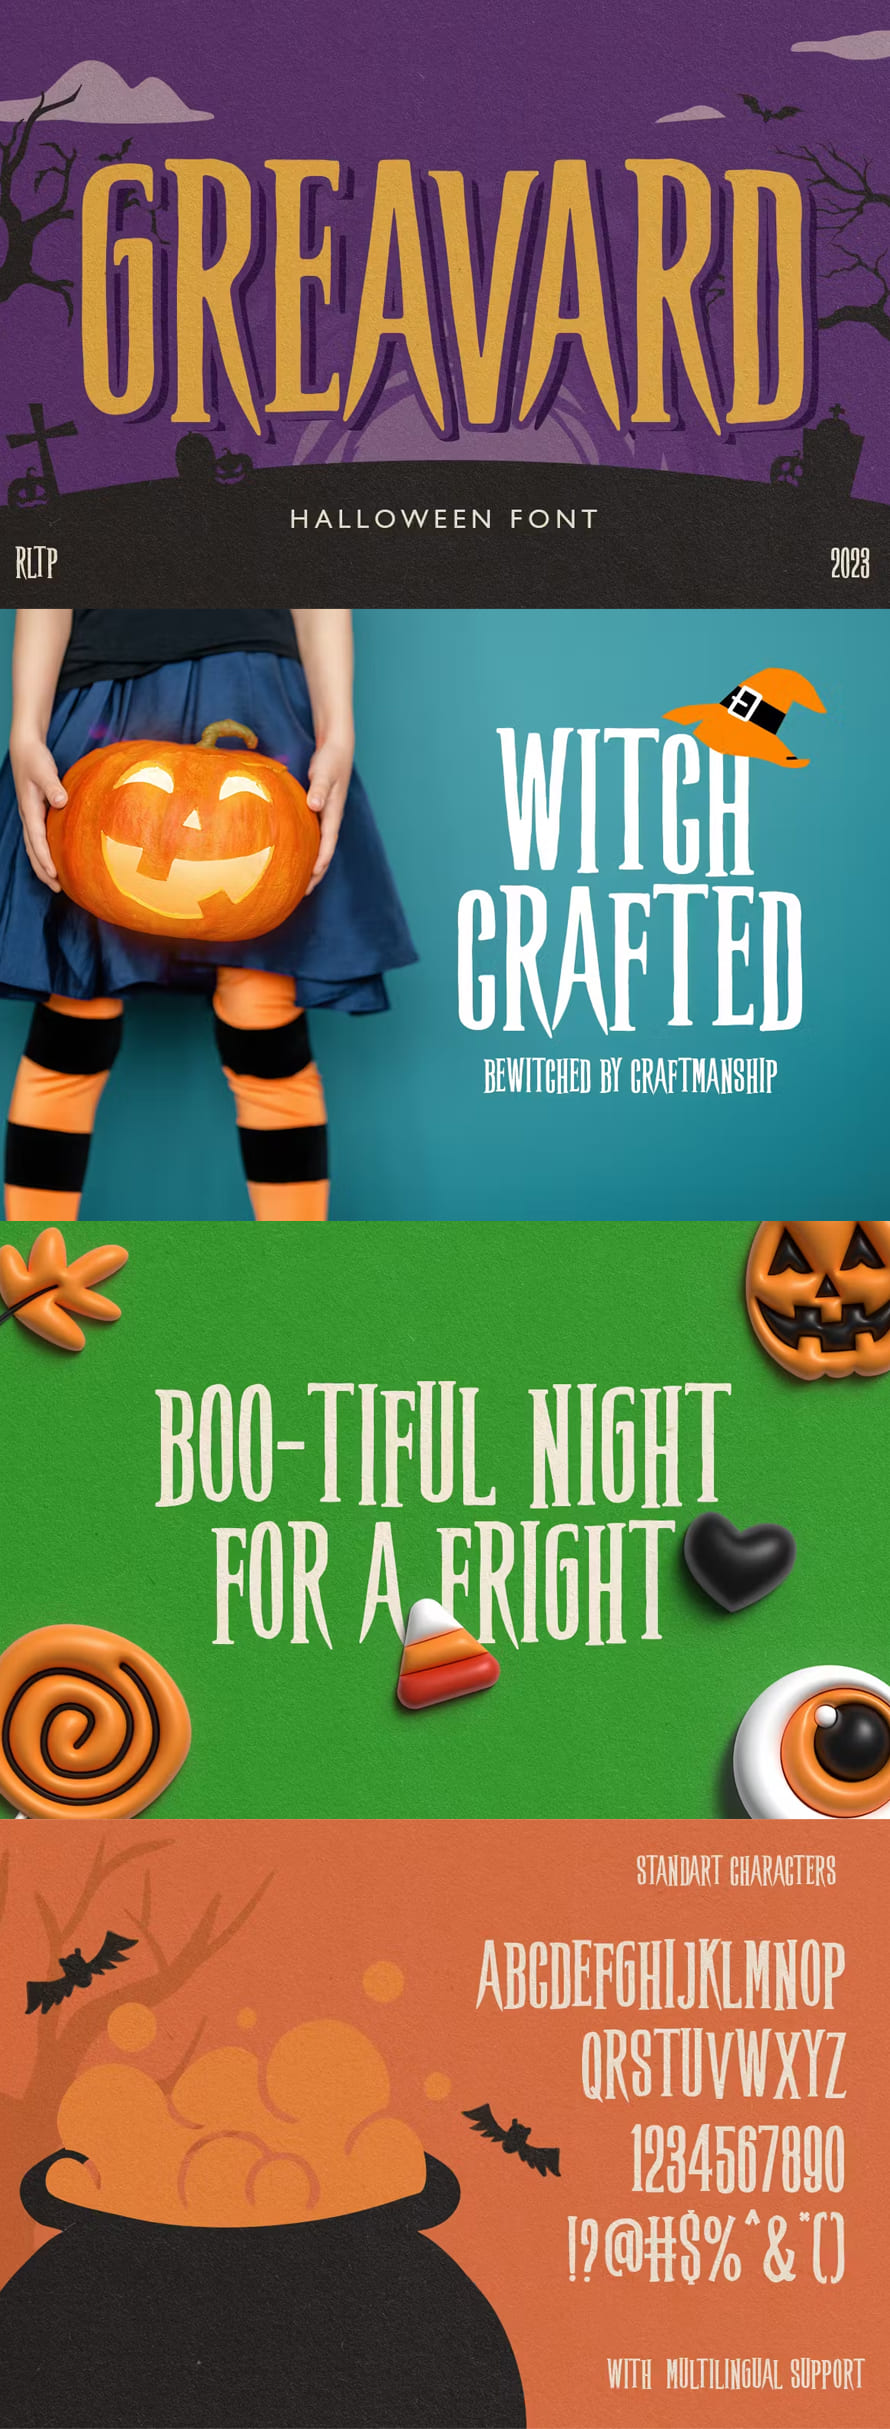 Gravard Halloween Font